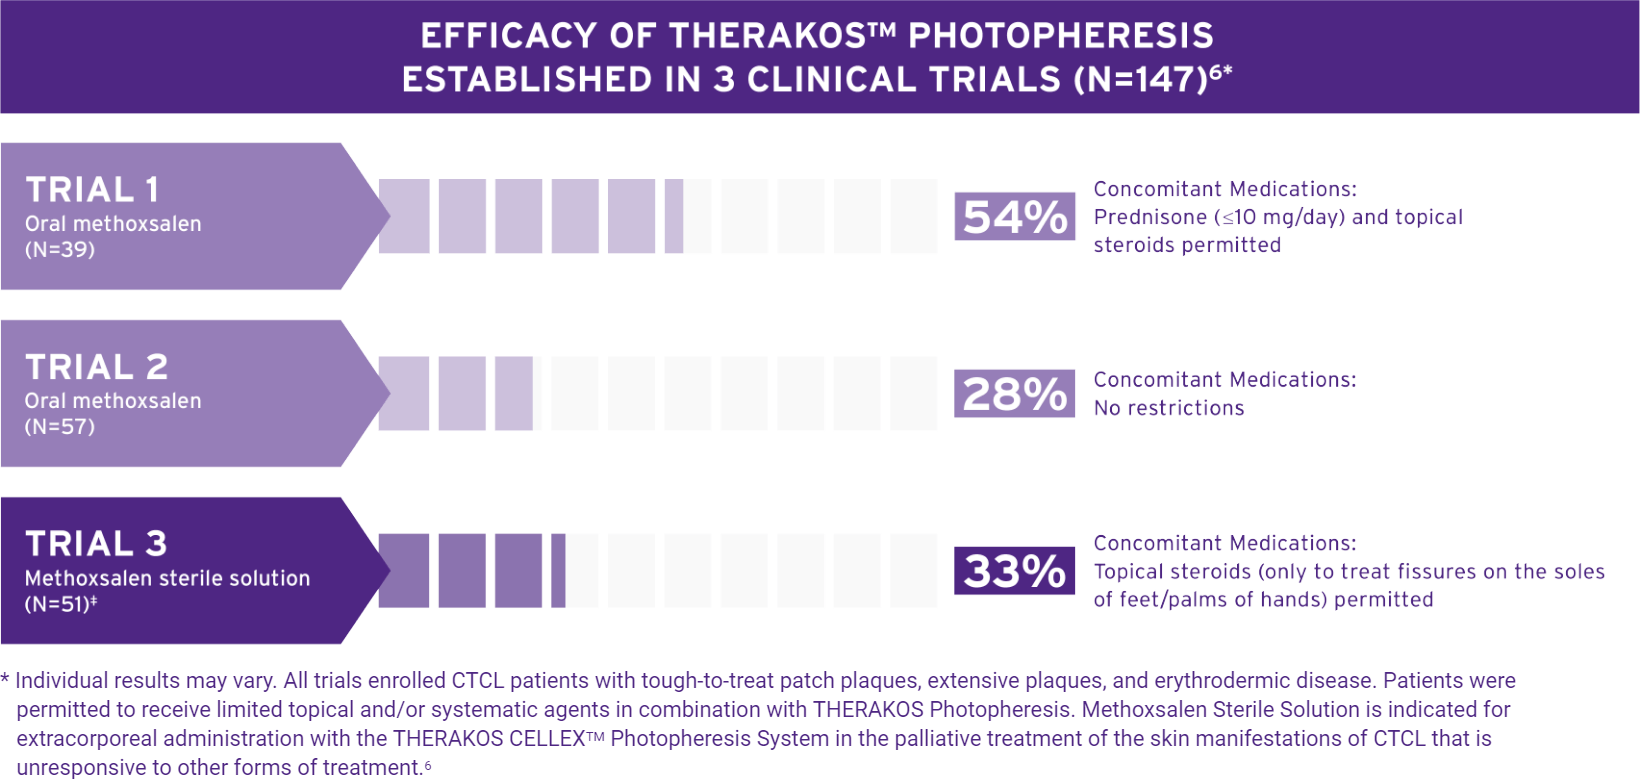 Efficacy of Therakos Photopheresis